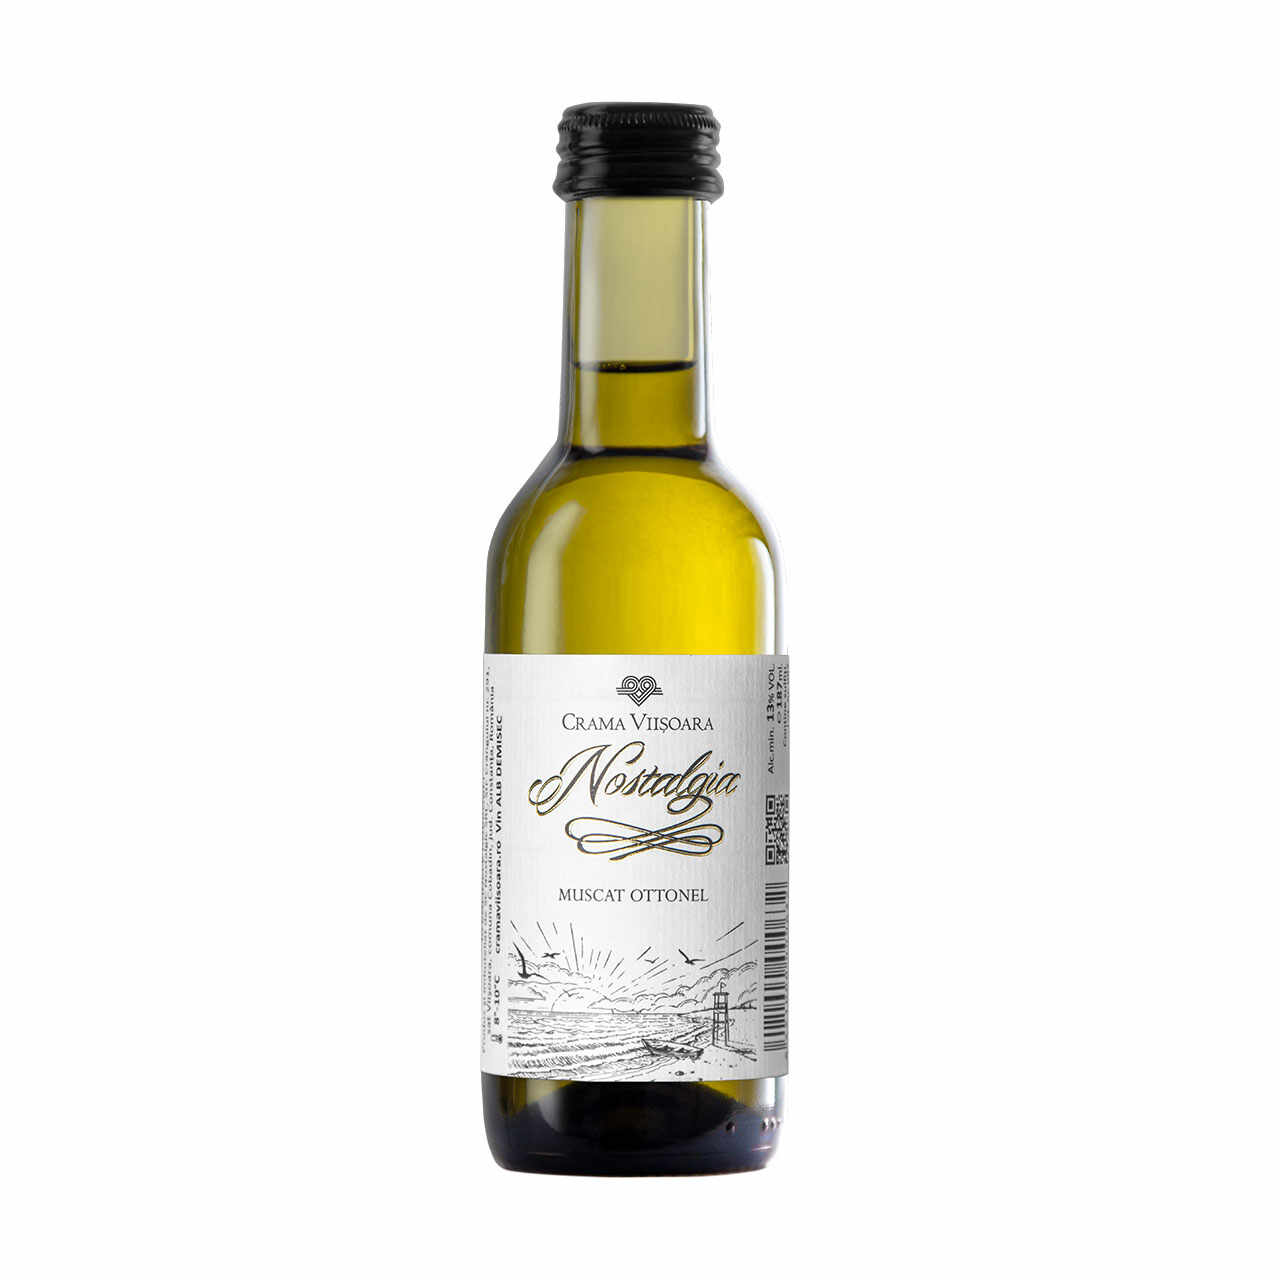 Vin alb - Muscat Ottonel - Nostalgia, 187 ml | Crama Viisoara